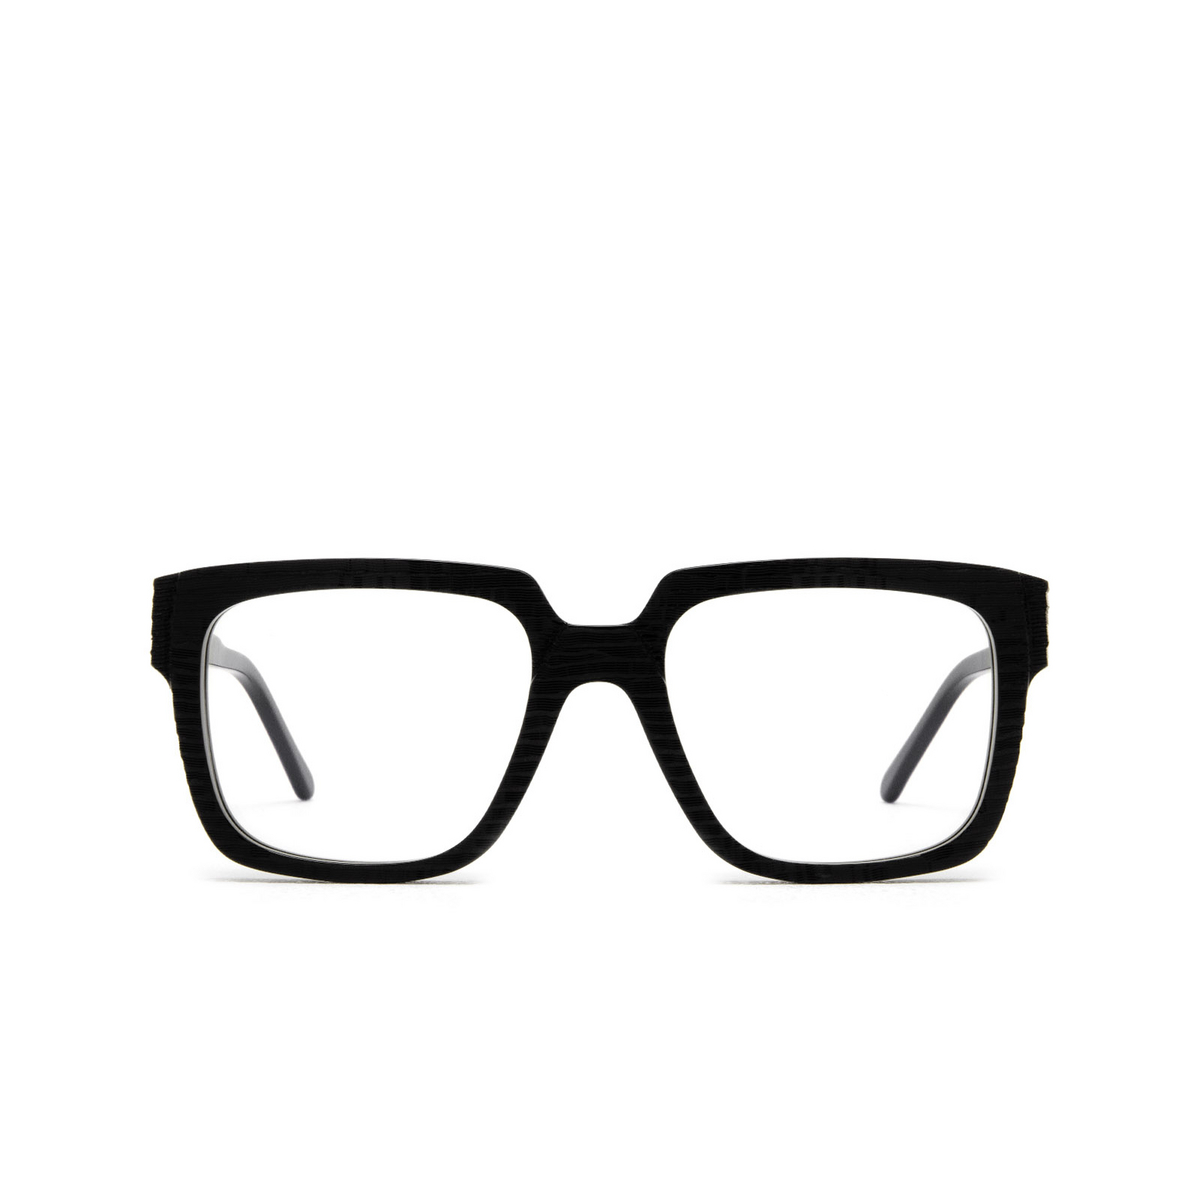 Kuboraum K3 Eyeglasses BS NT Black Shine & Handcraft Finishing - front view